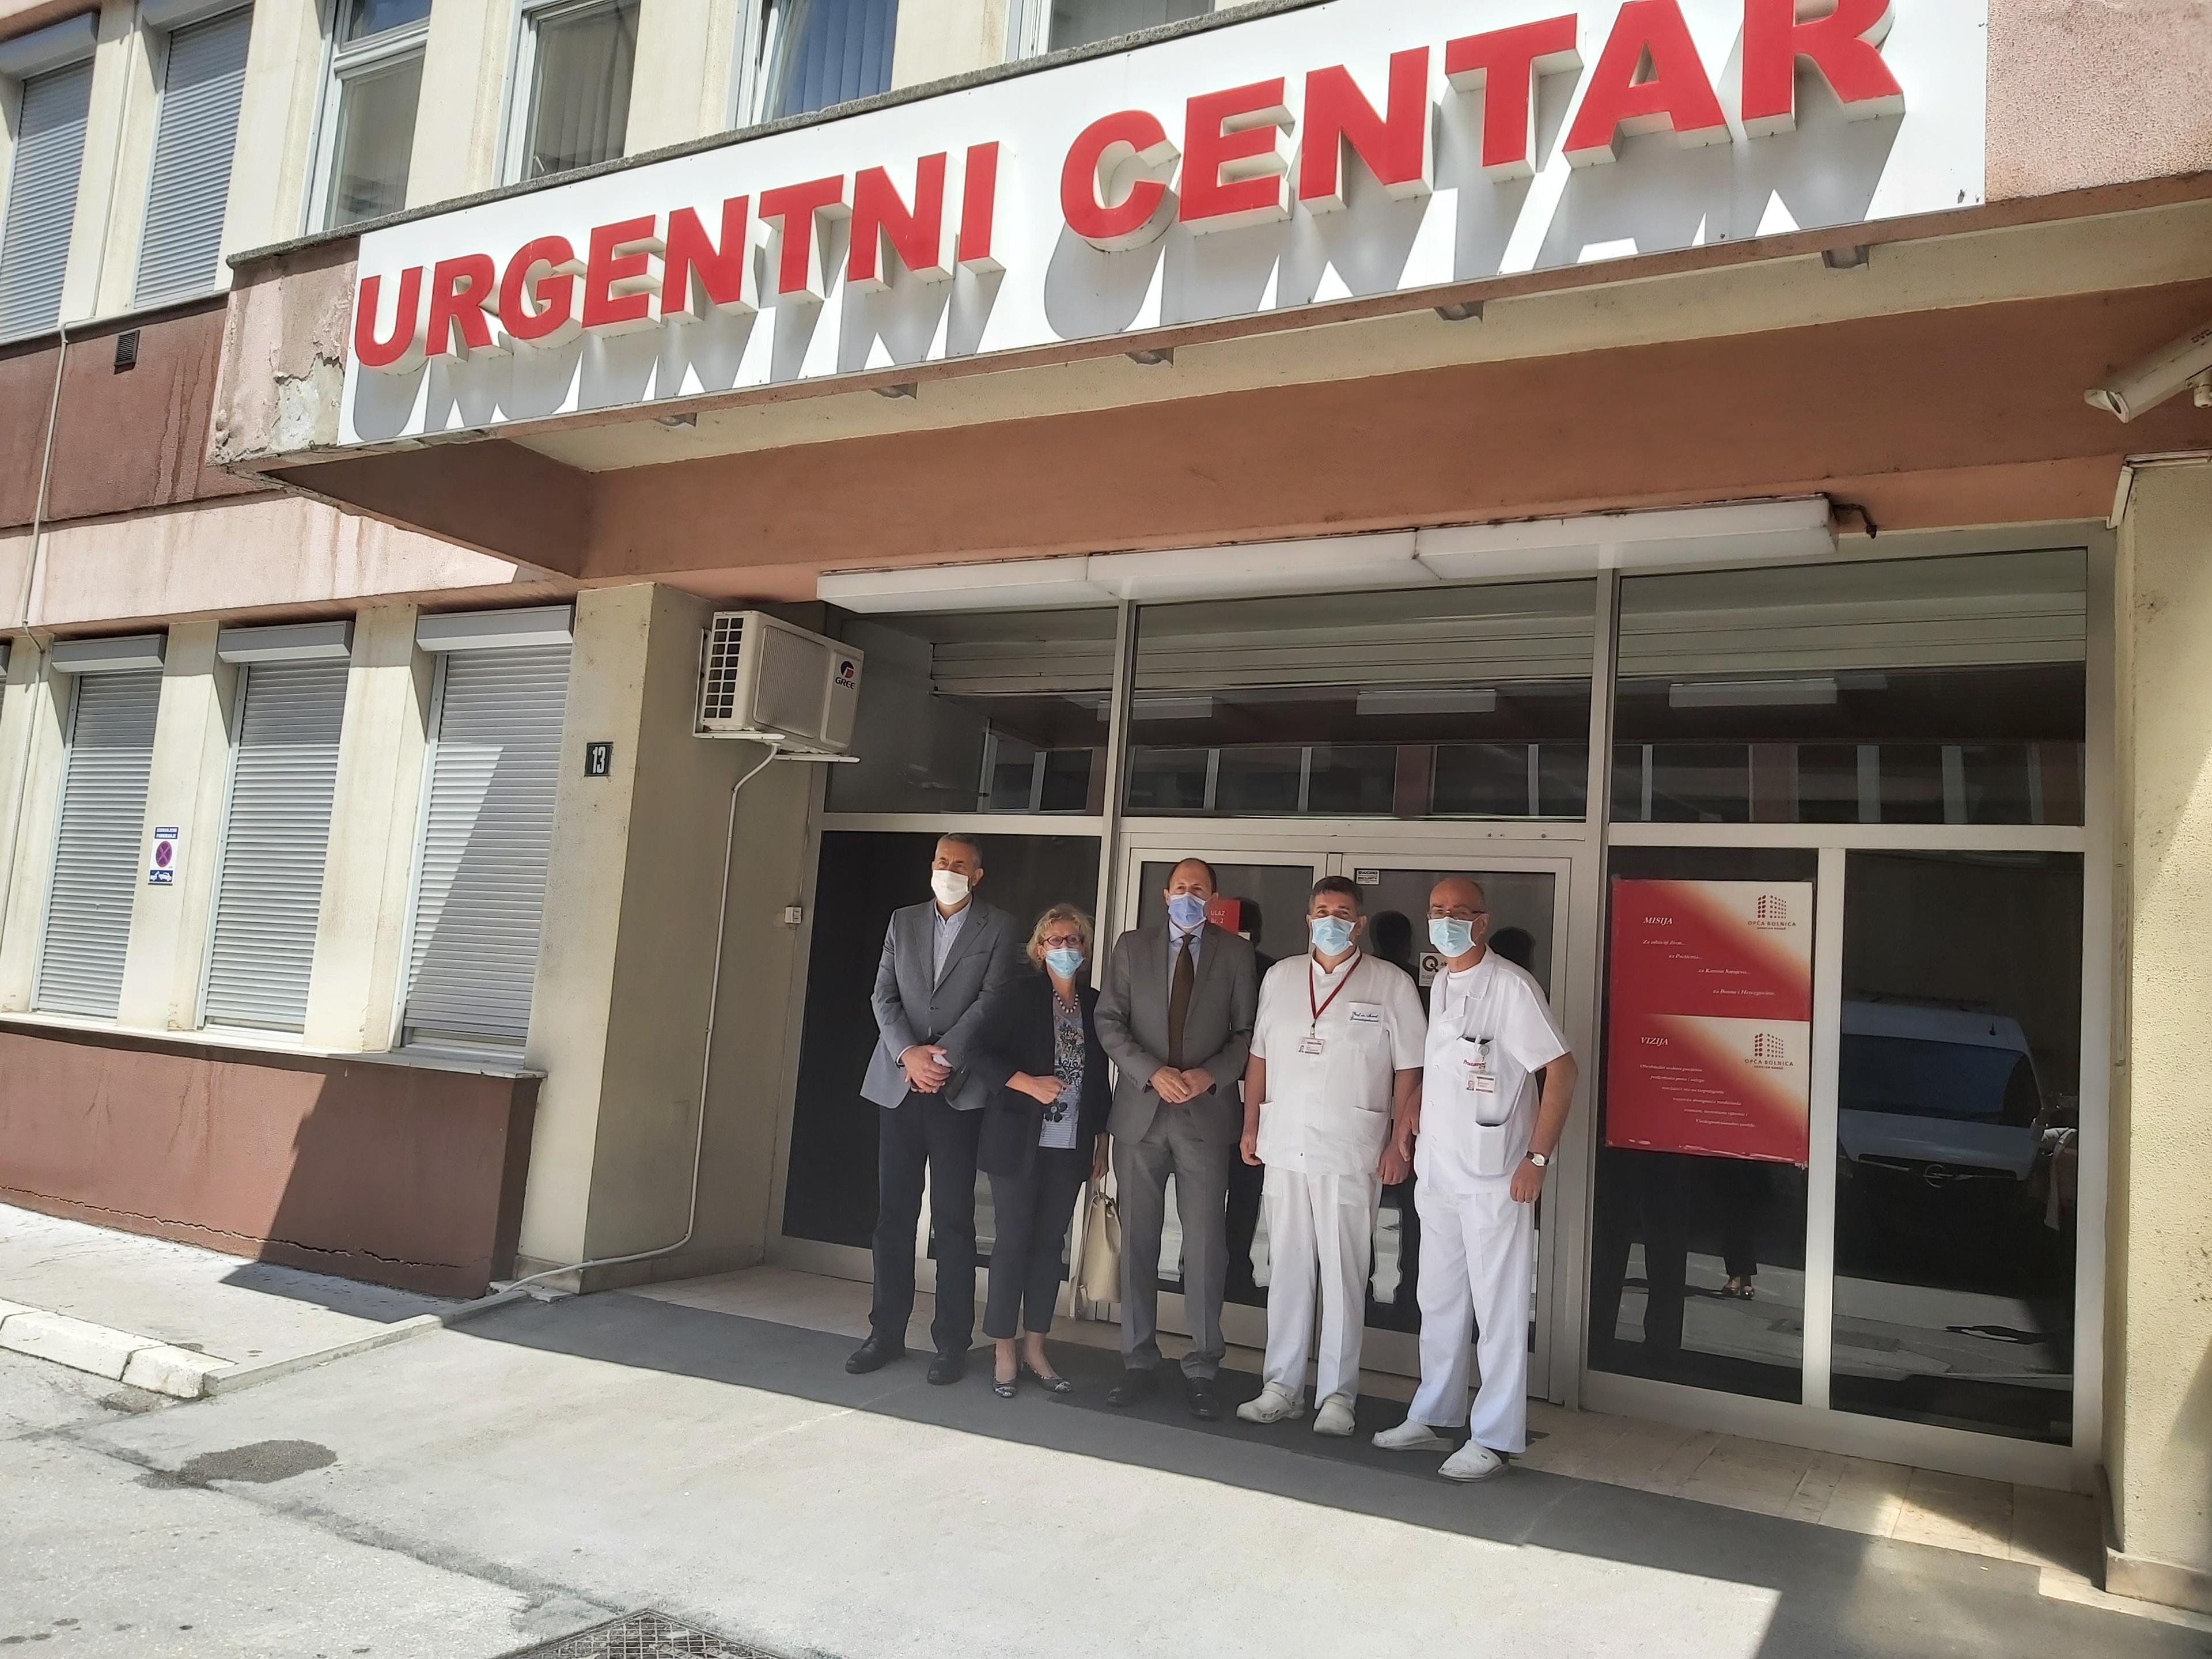 Premijer Nenadić obišao Urgentni centar Opće bolnice "Prim. dr. Abdulah Nakaš" - Avaz